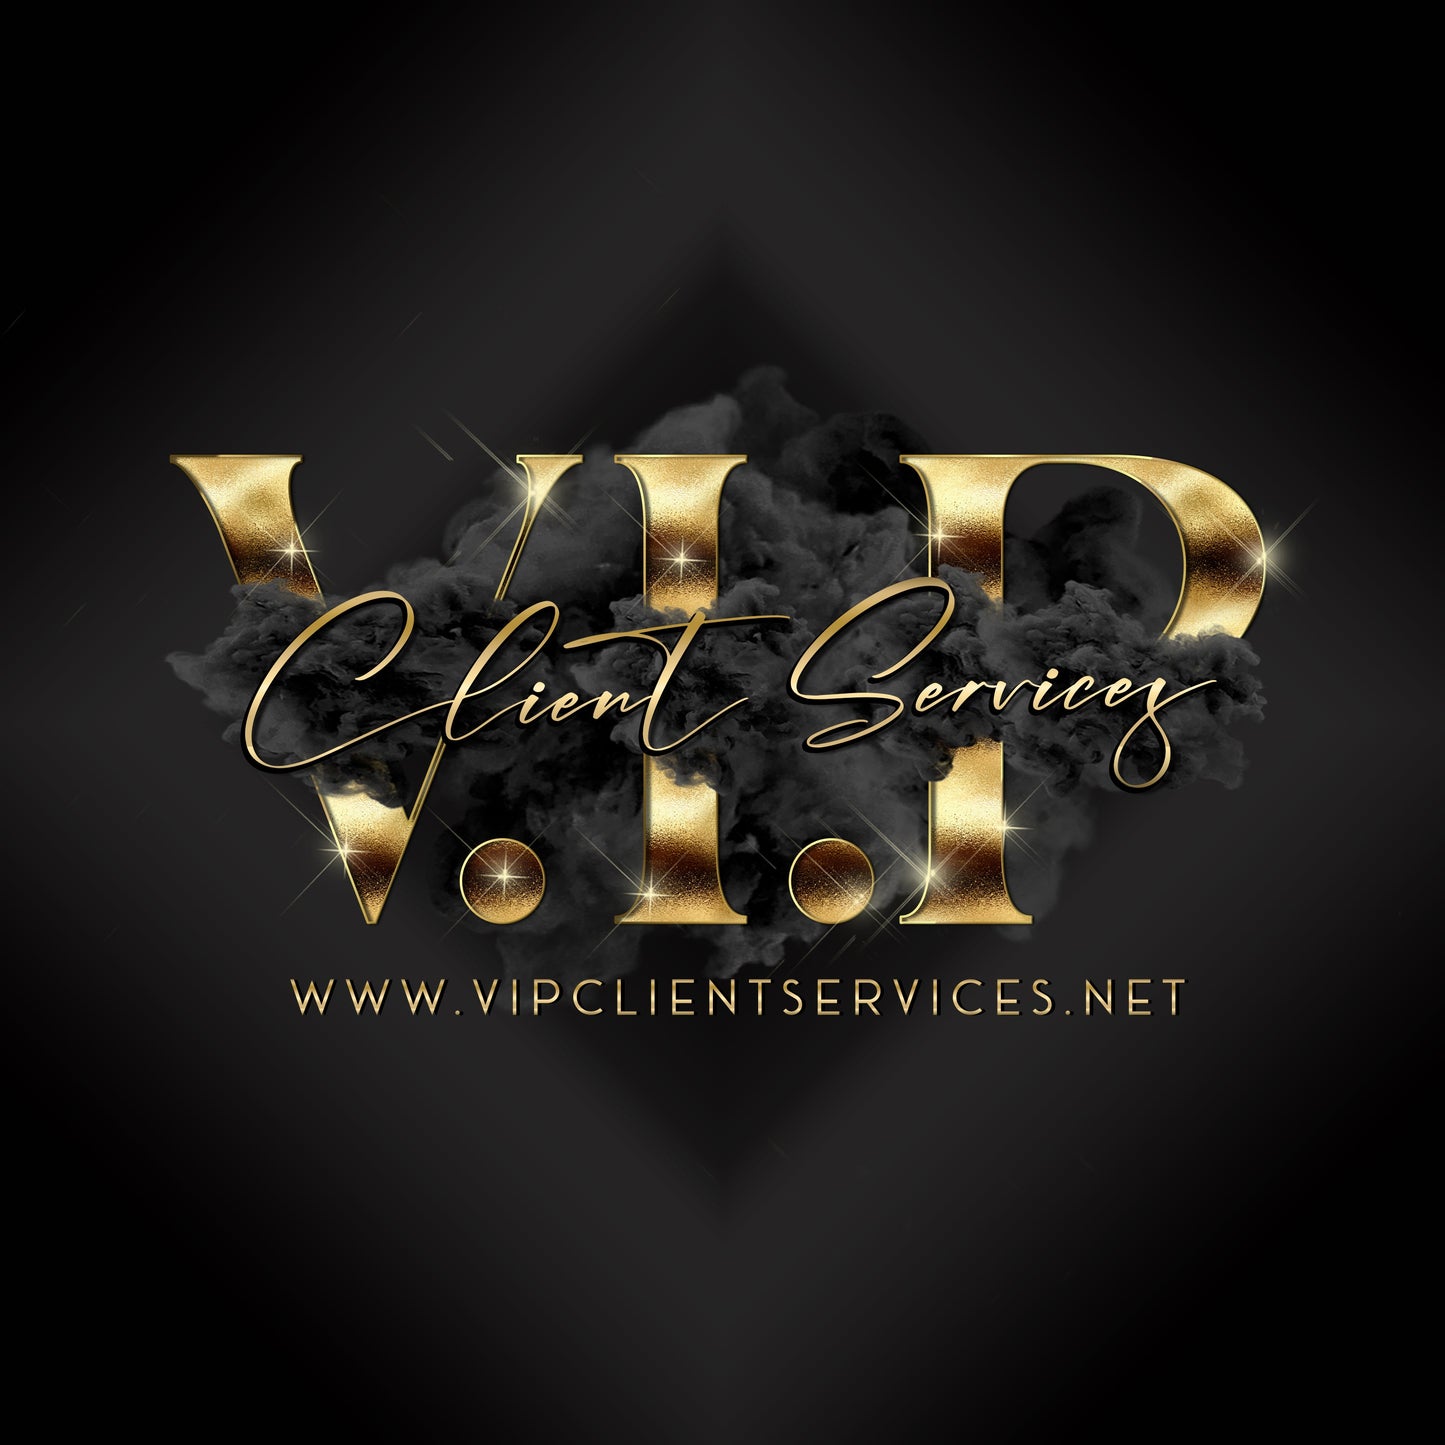 V.I.P Client Services